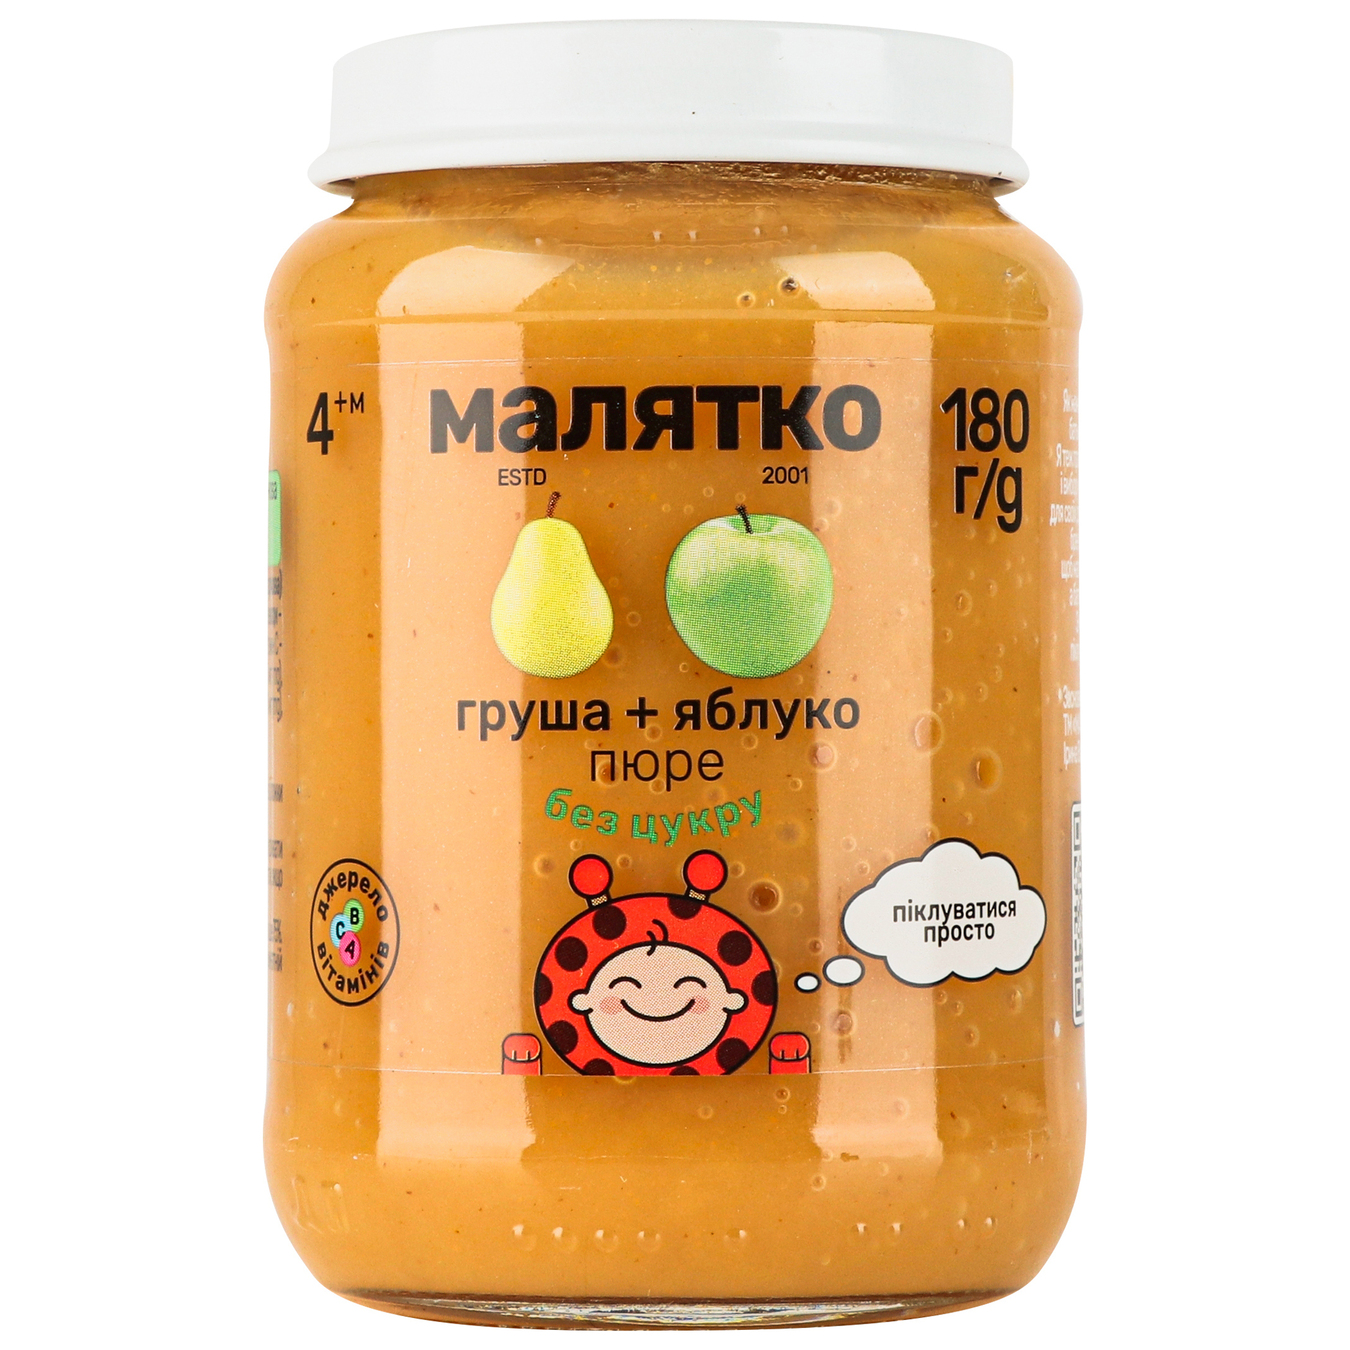 Malyatko for children from 4 months apple pear puree 180g